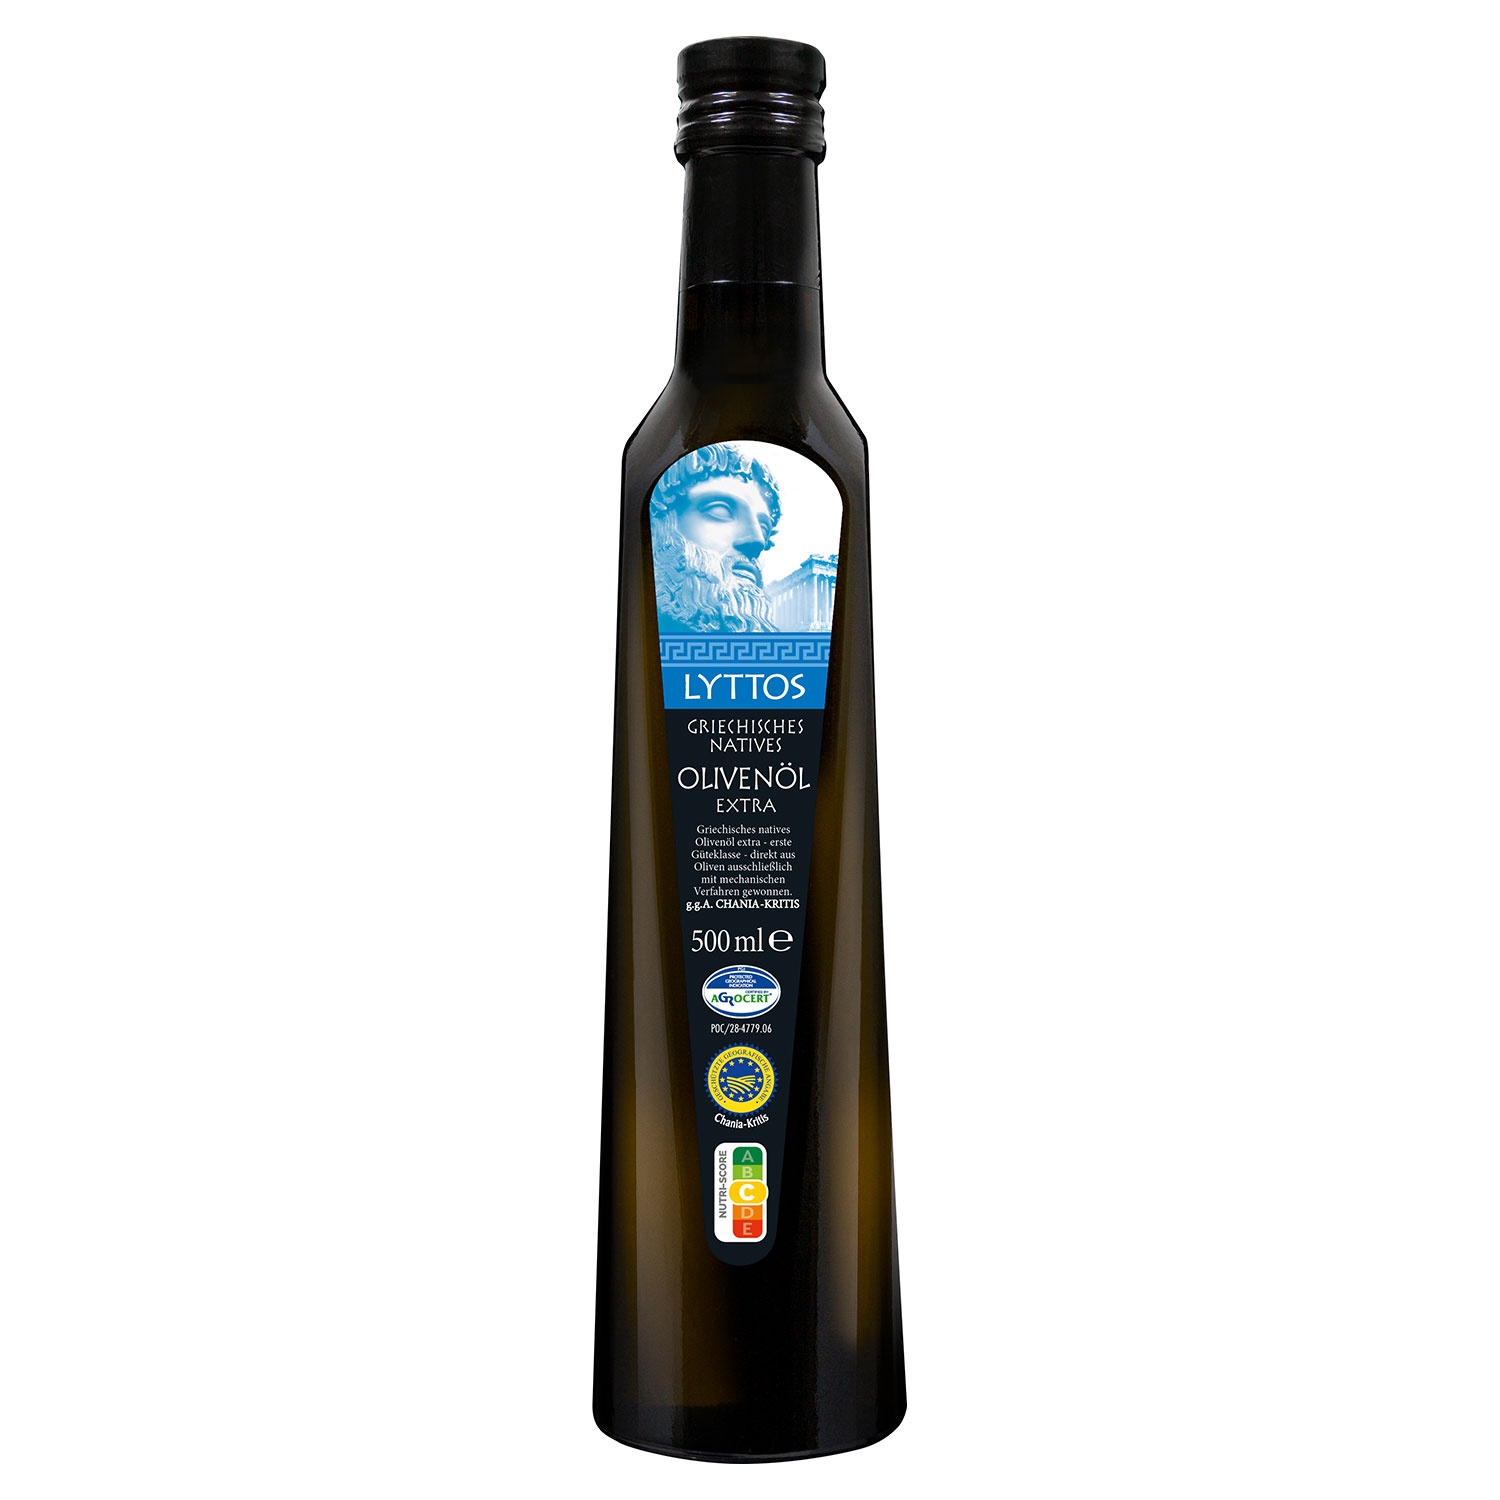 LYTTOS Griechisches natives Olivenöl extra g. g. A. Chania 500 ml